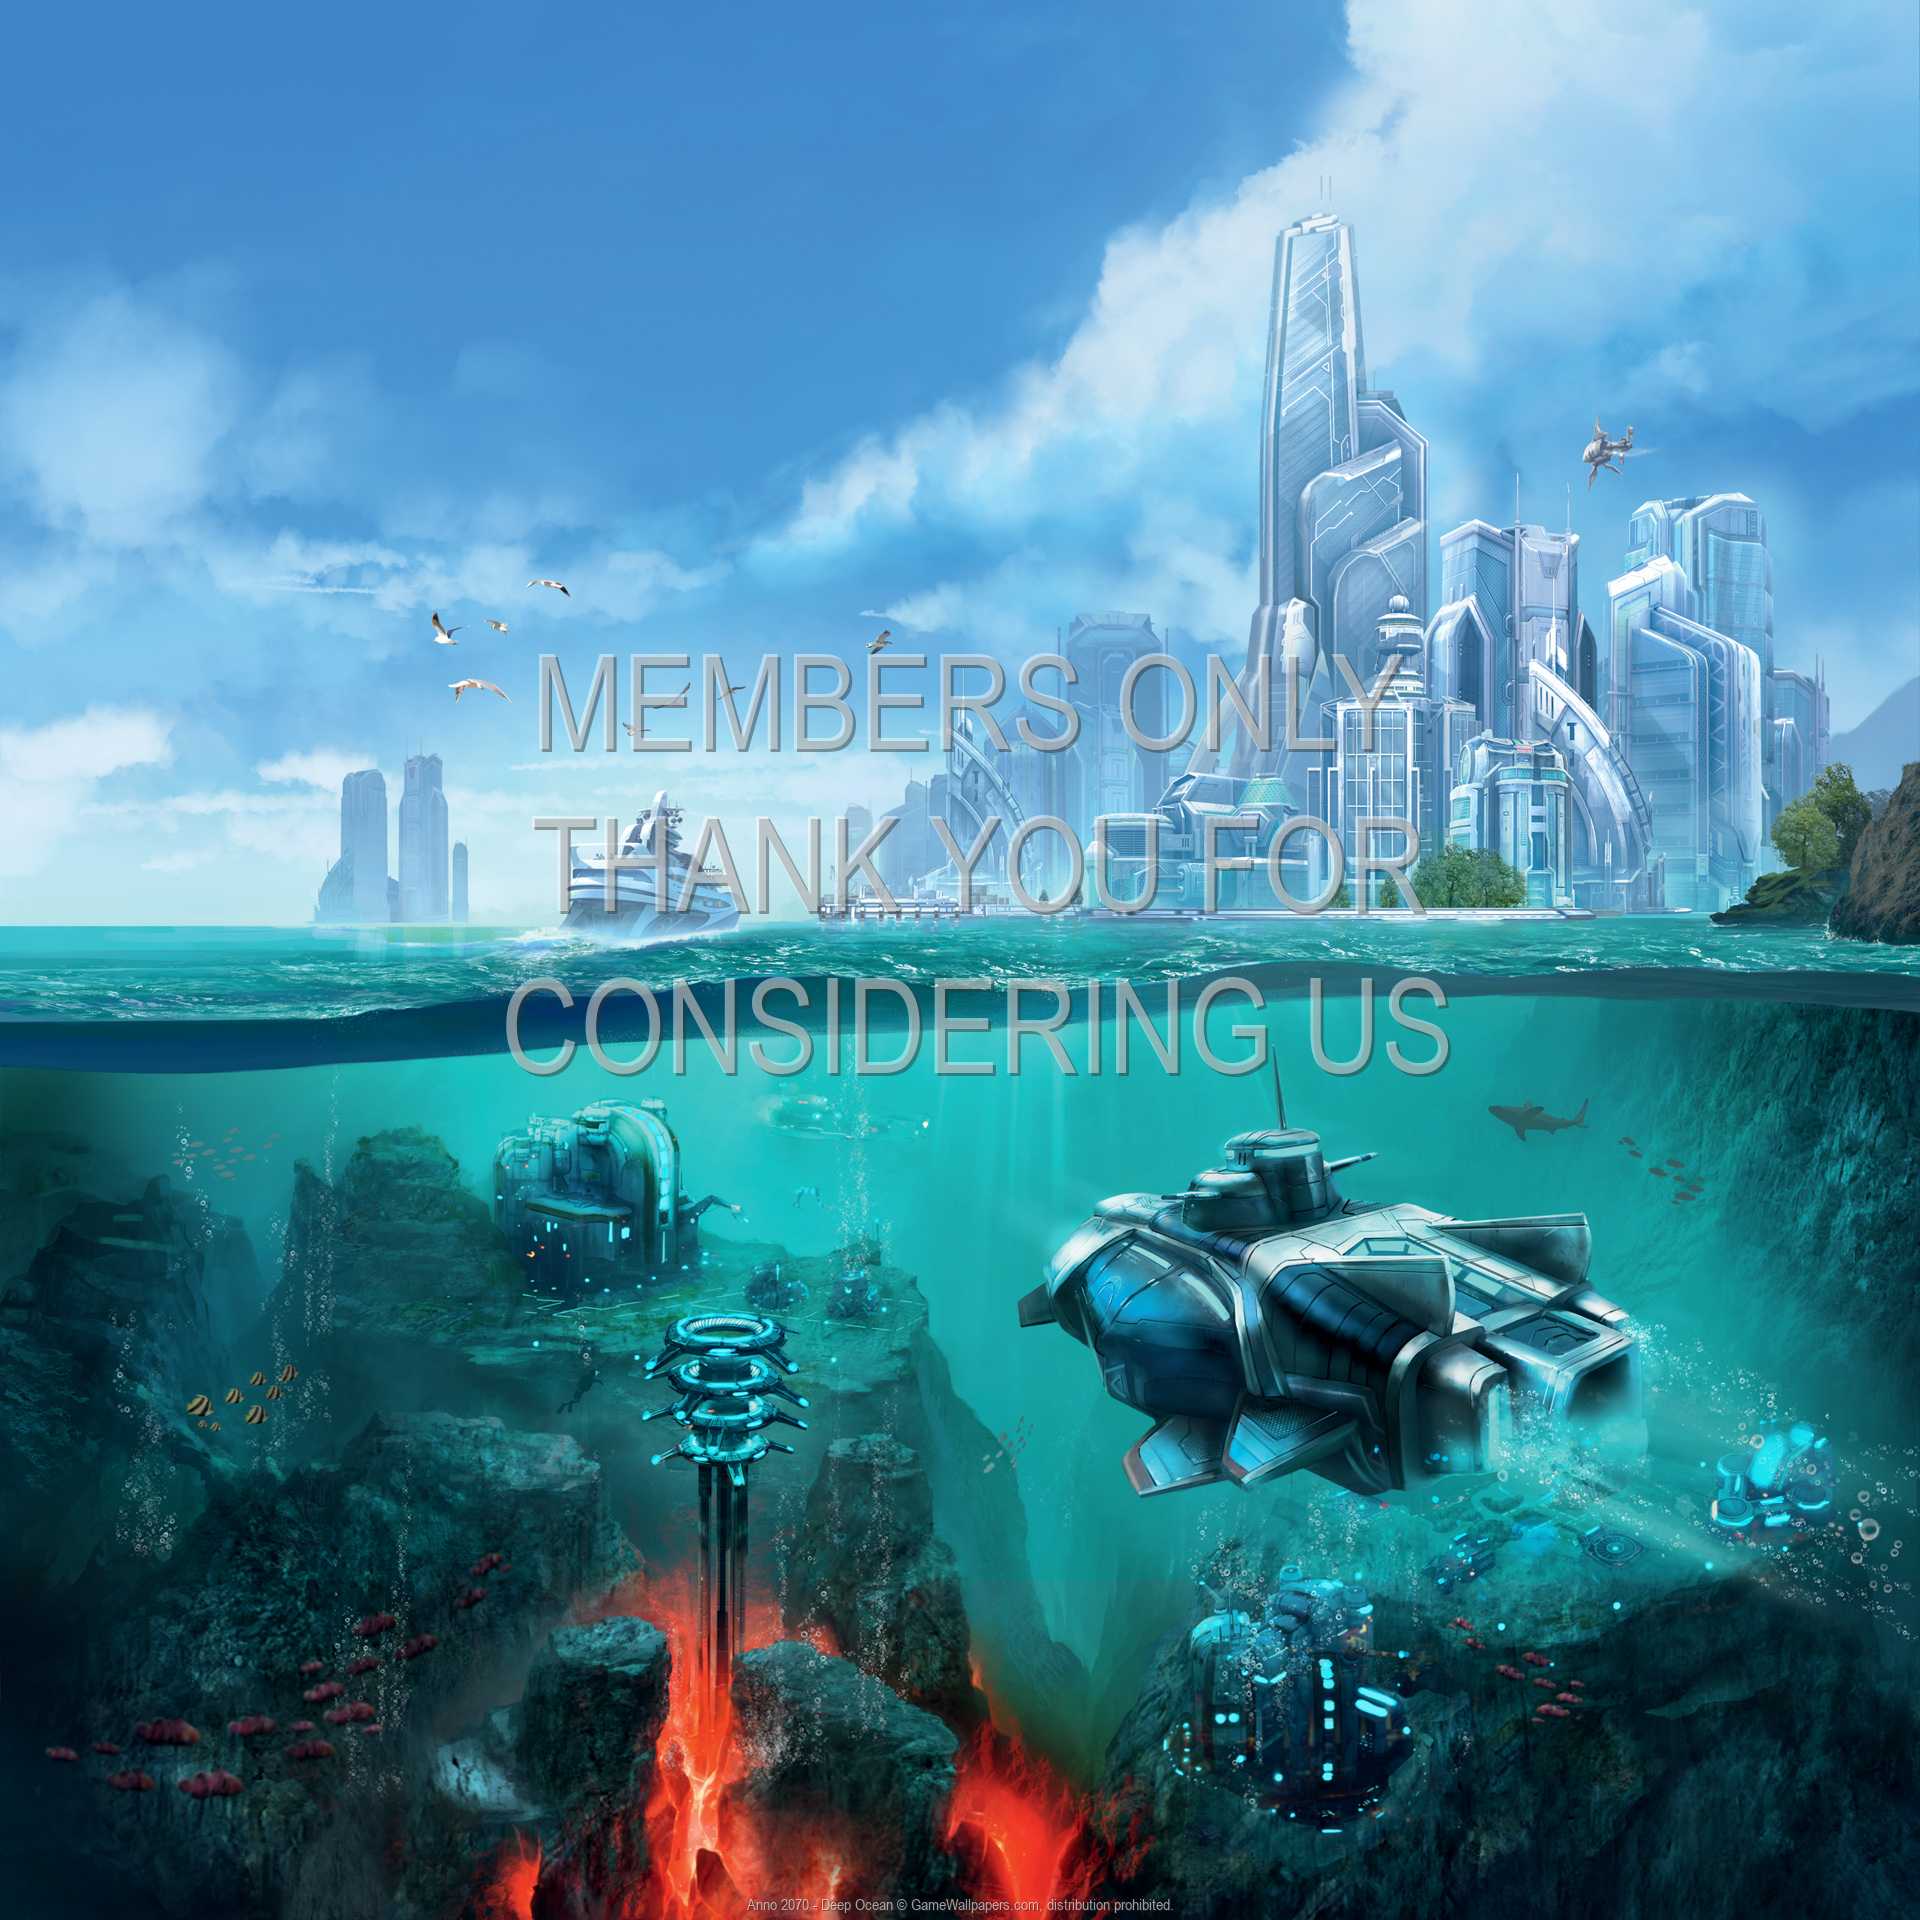 Anno 2070 - Deep Ocean 1080p%20Horizontal Mobile wallpaper or background 03